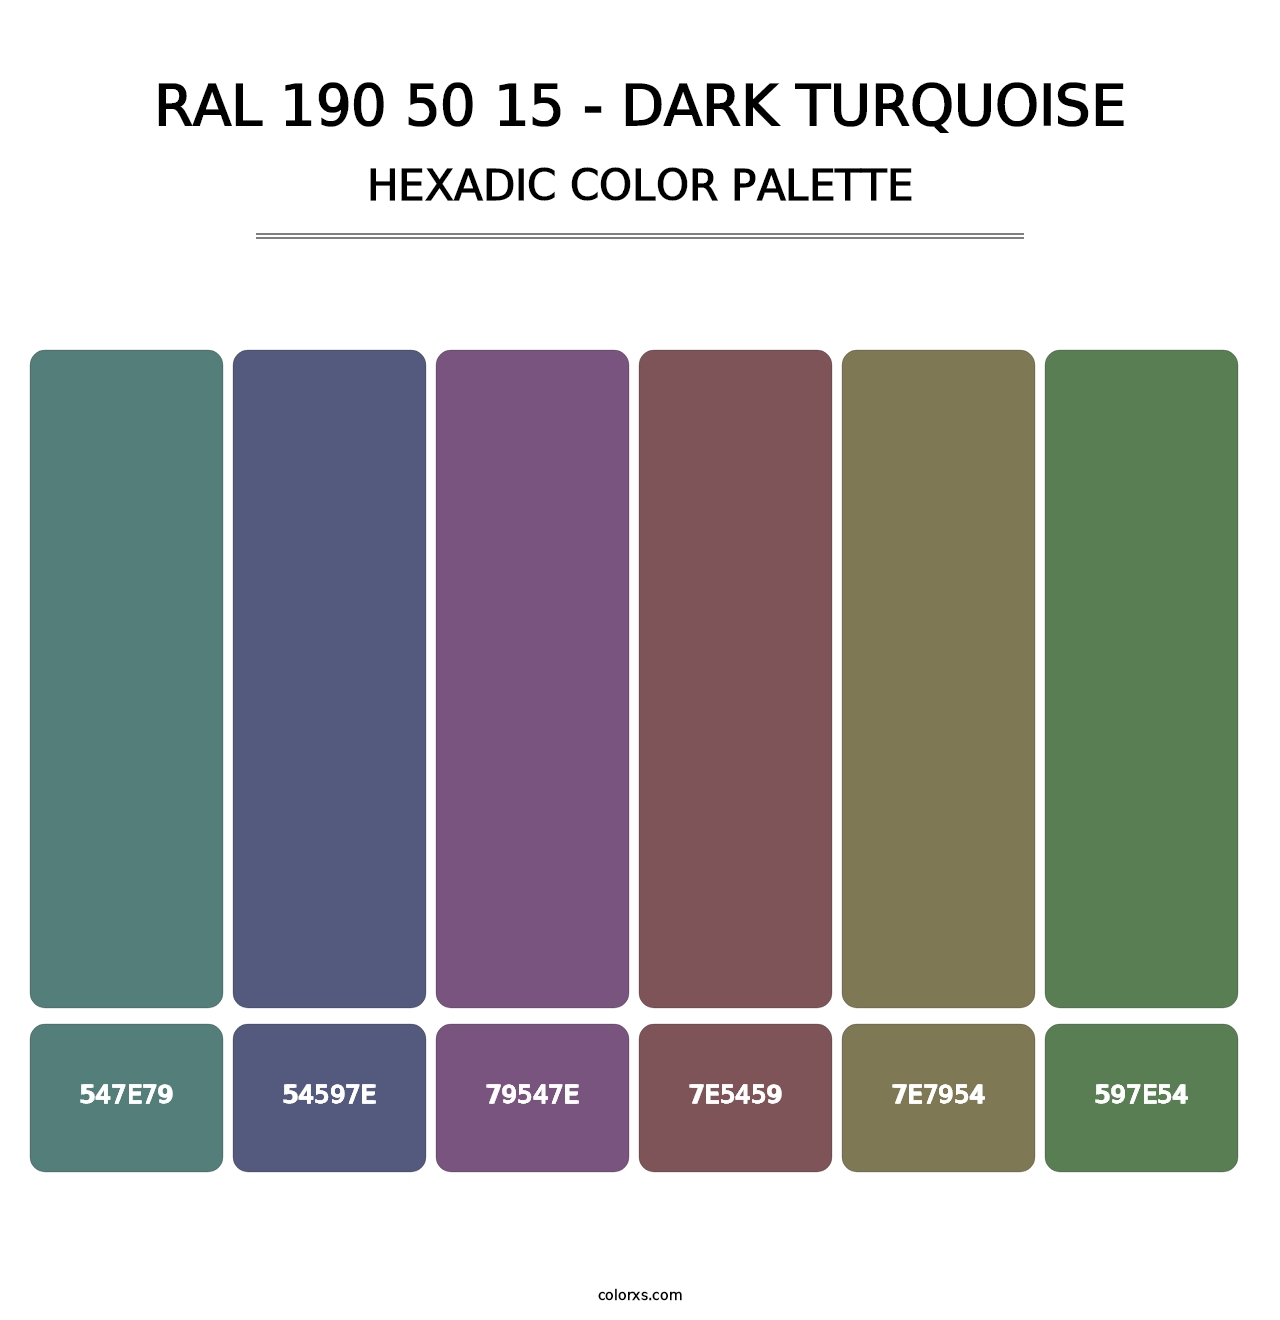 RAL 190 50 15 - Dark Turquoise - Hexadic Color Palette